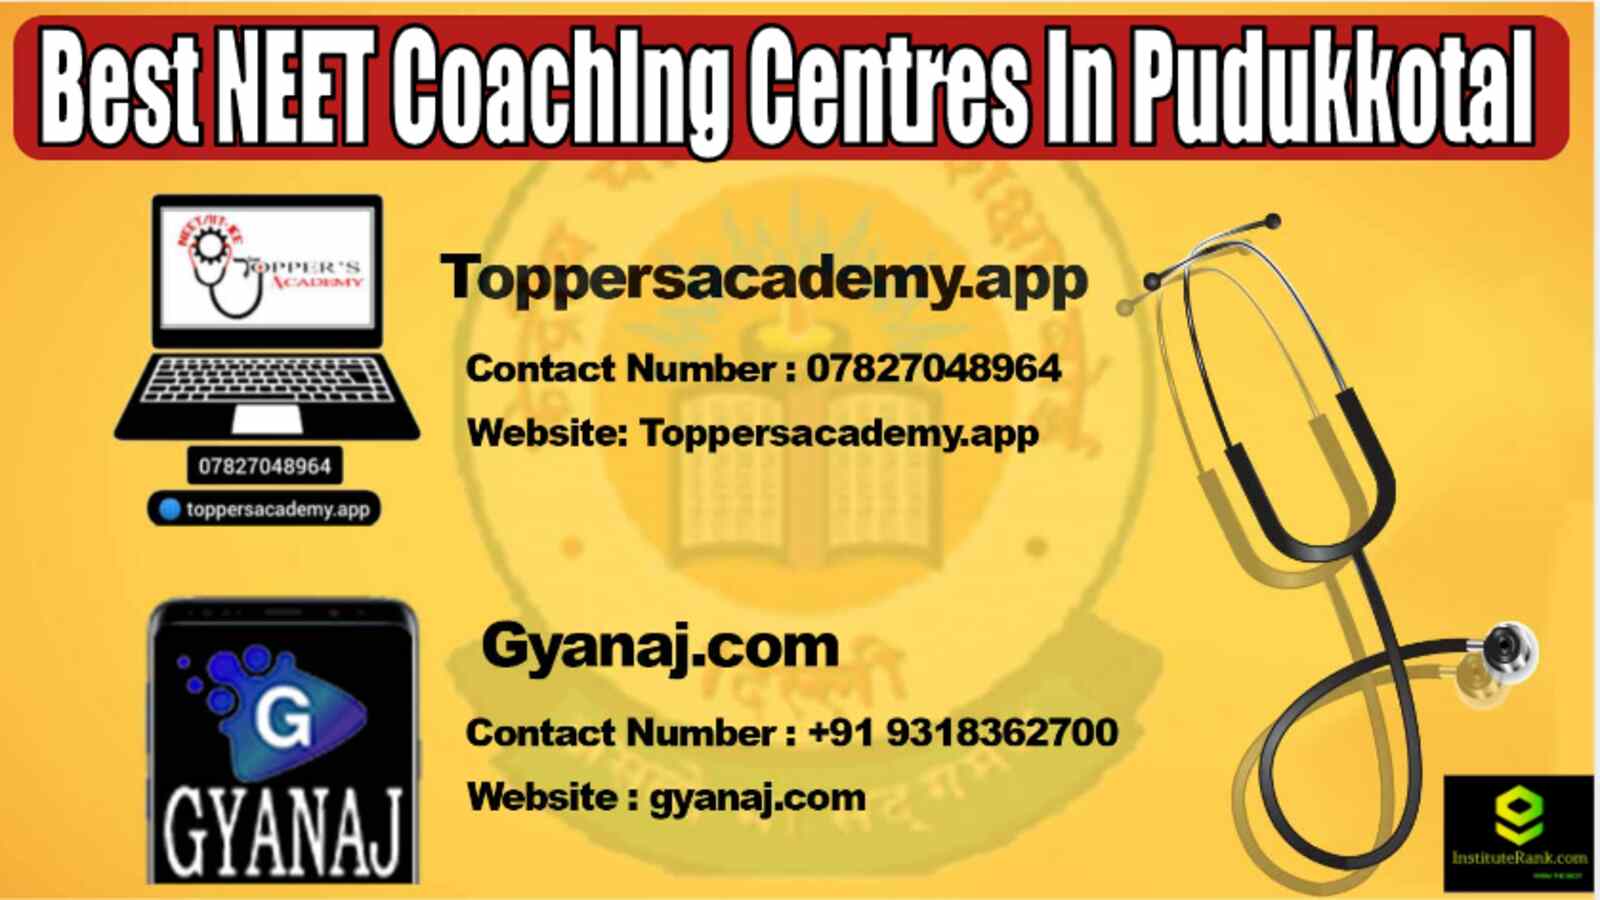 Best NEET Coaching Centres in Pudukkotai